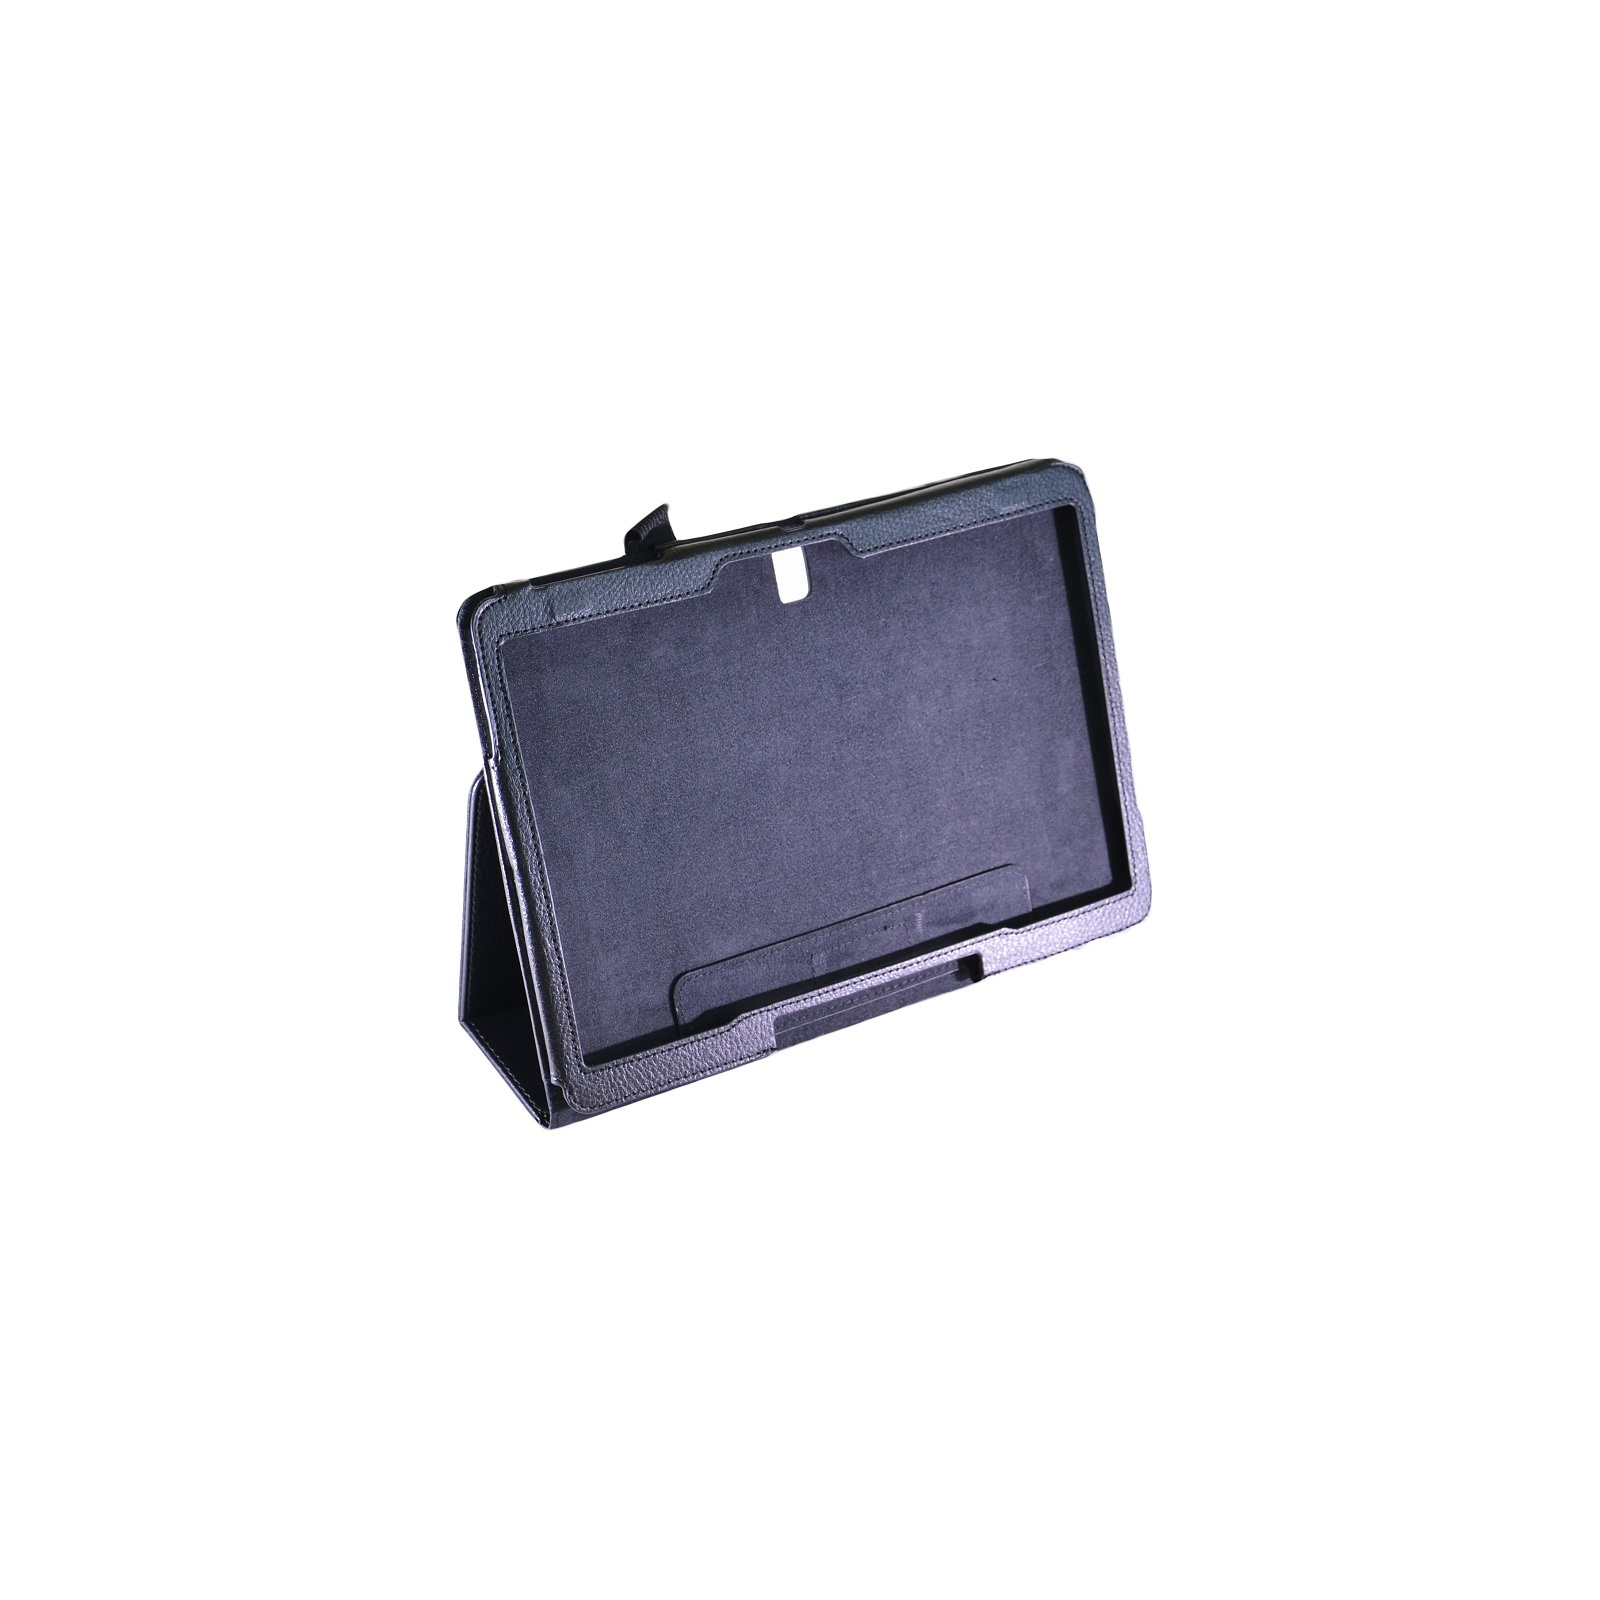 Чехол для планшета Pro-case 10,5" SM-T800 Galaxy Tab S 10.5 black (SM-T800b) изображение 3